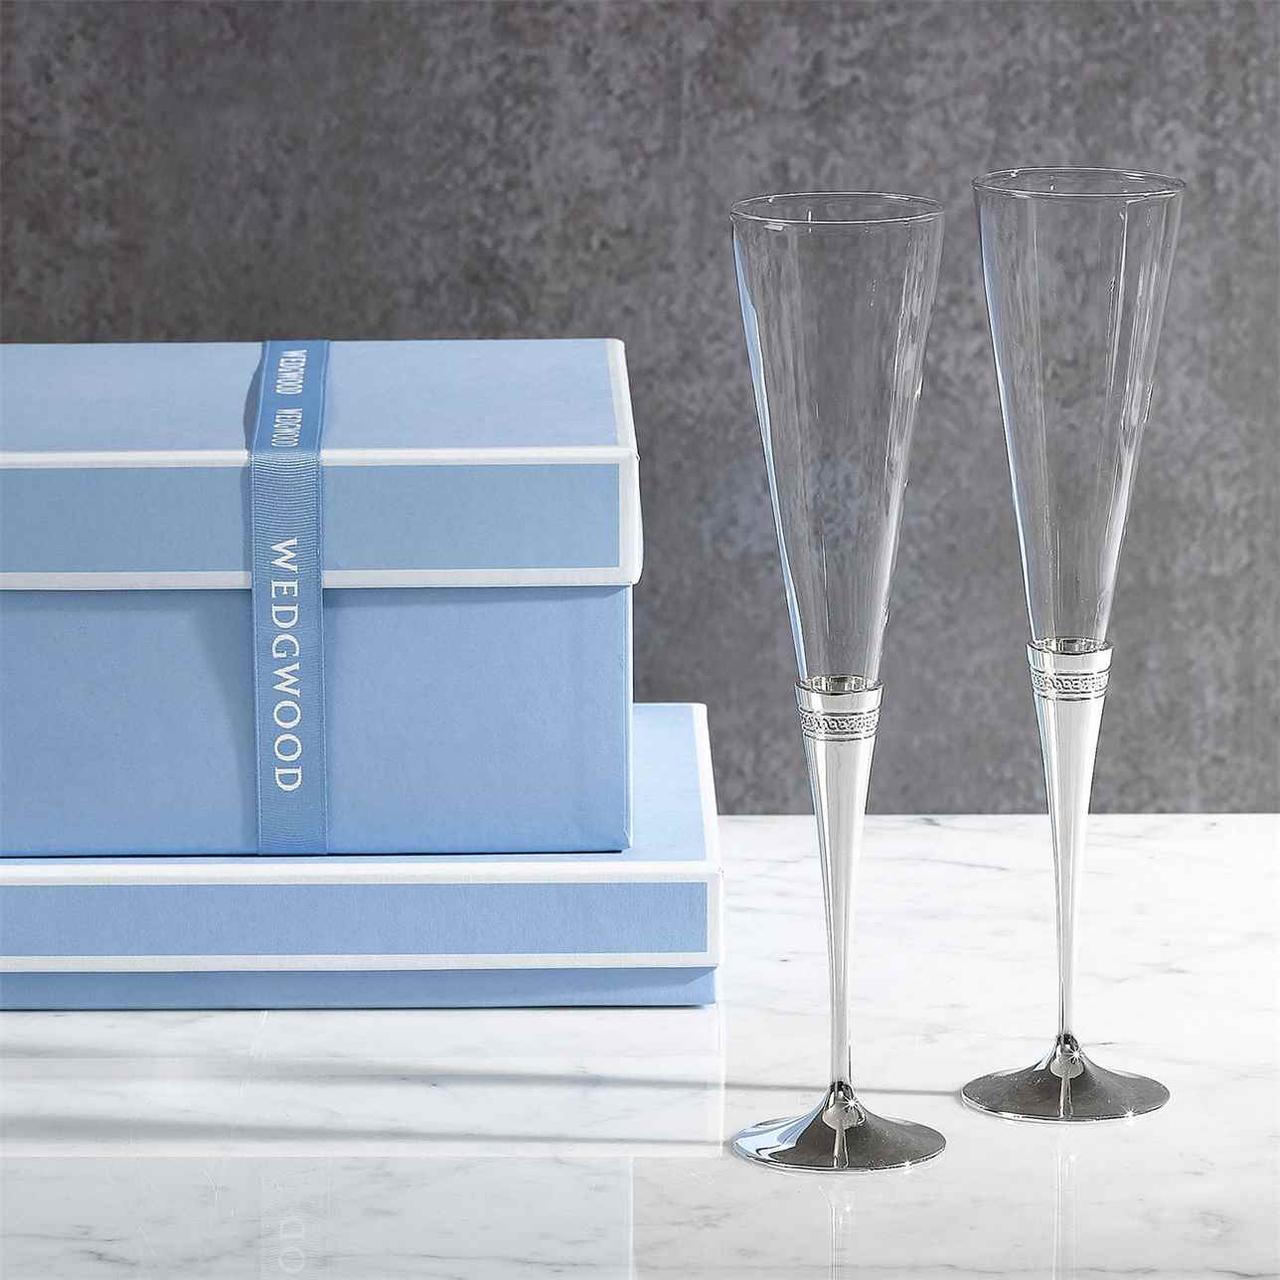 Mirrored silver-stemmed wedding champagne flutes